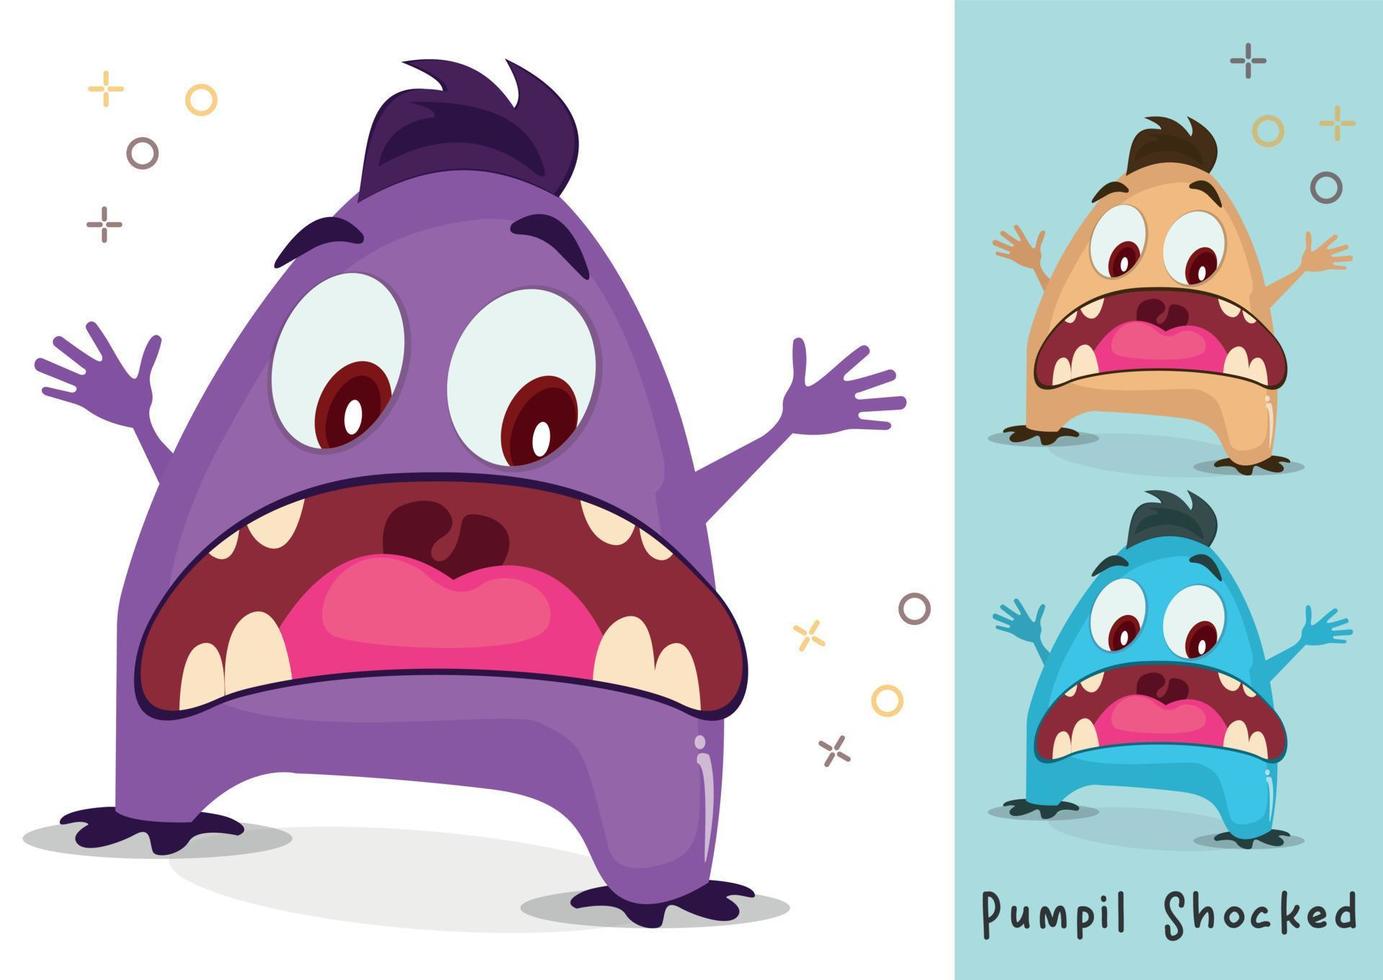 Cute monster character illustration design vector